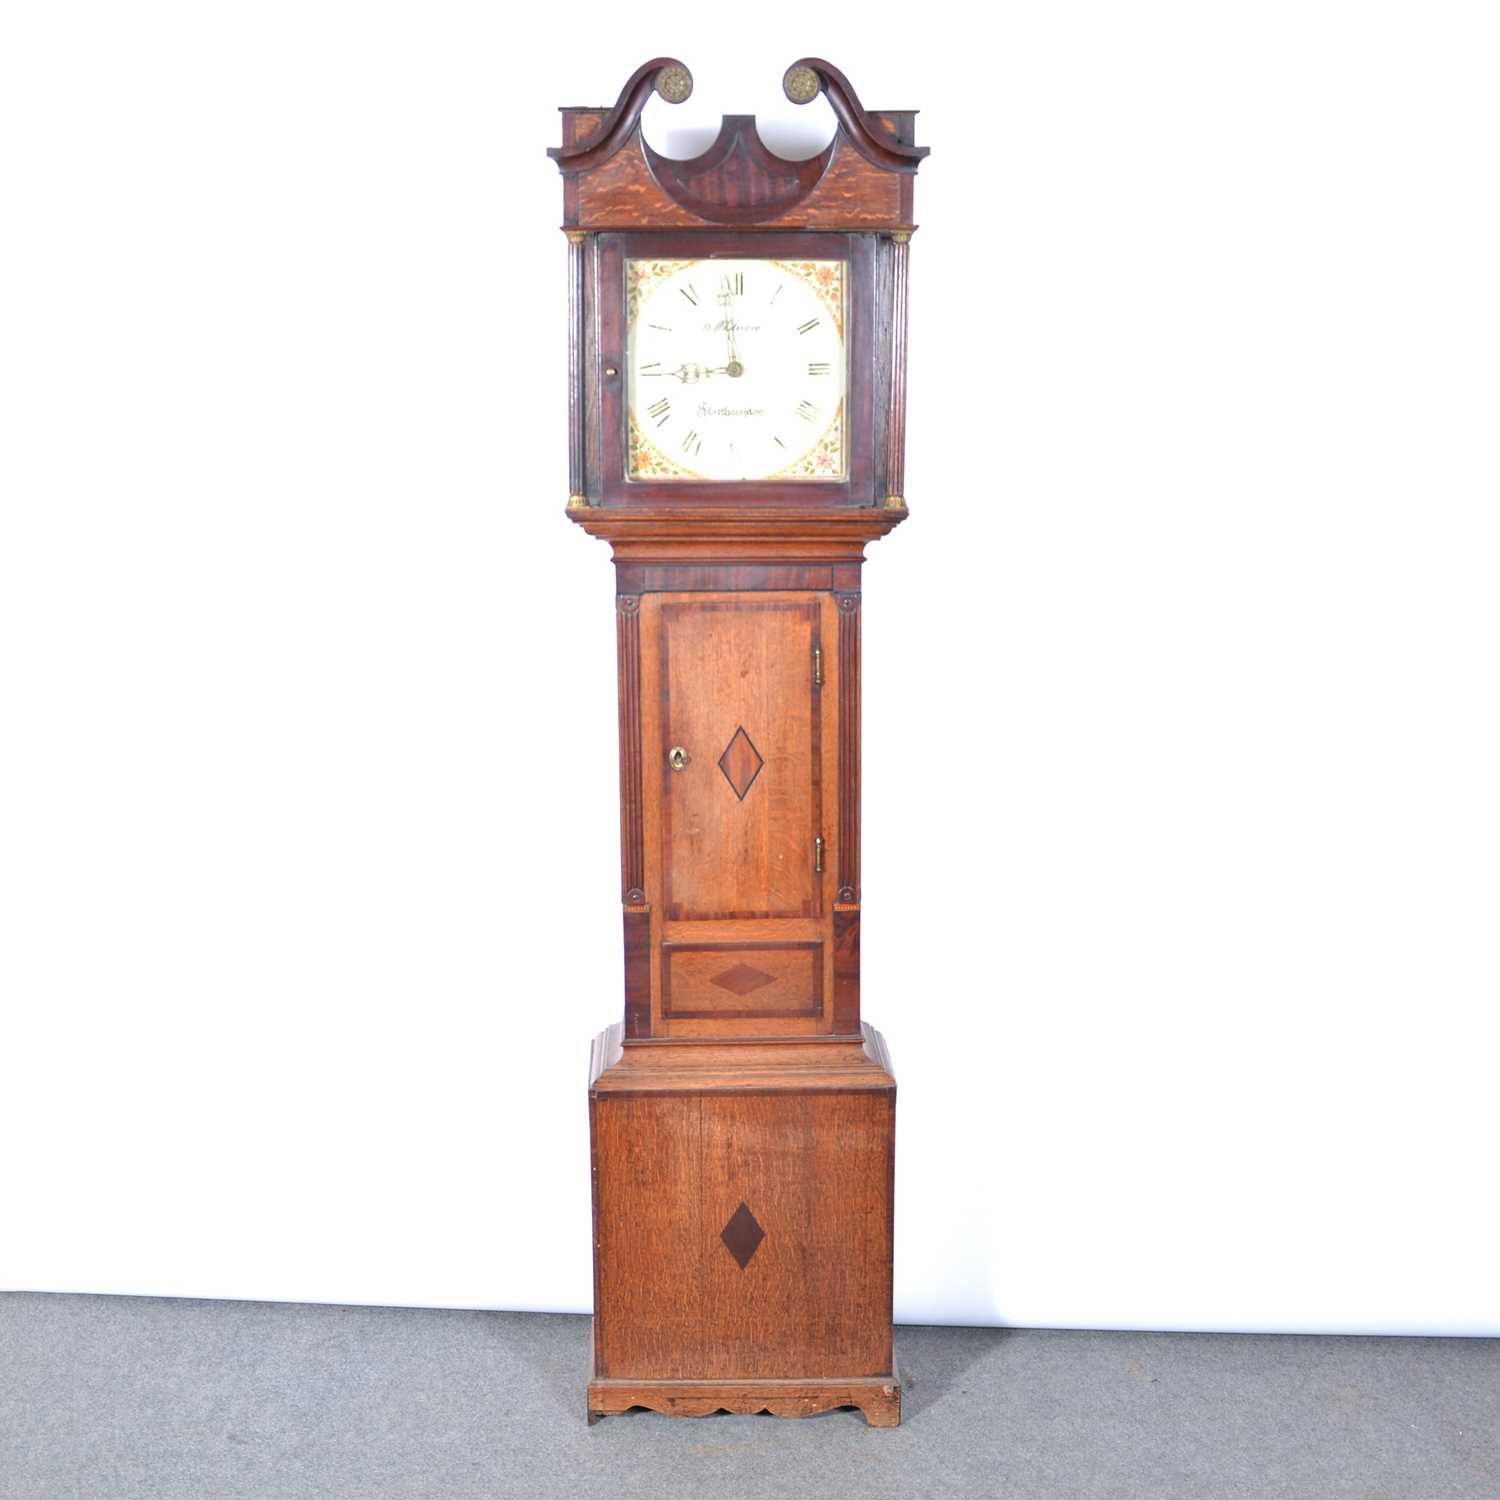 Oak mahogany longcase clock, hood with a swan-neck pediment, fluted columns, short door with lozenge